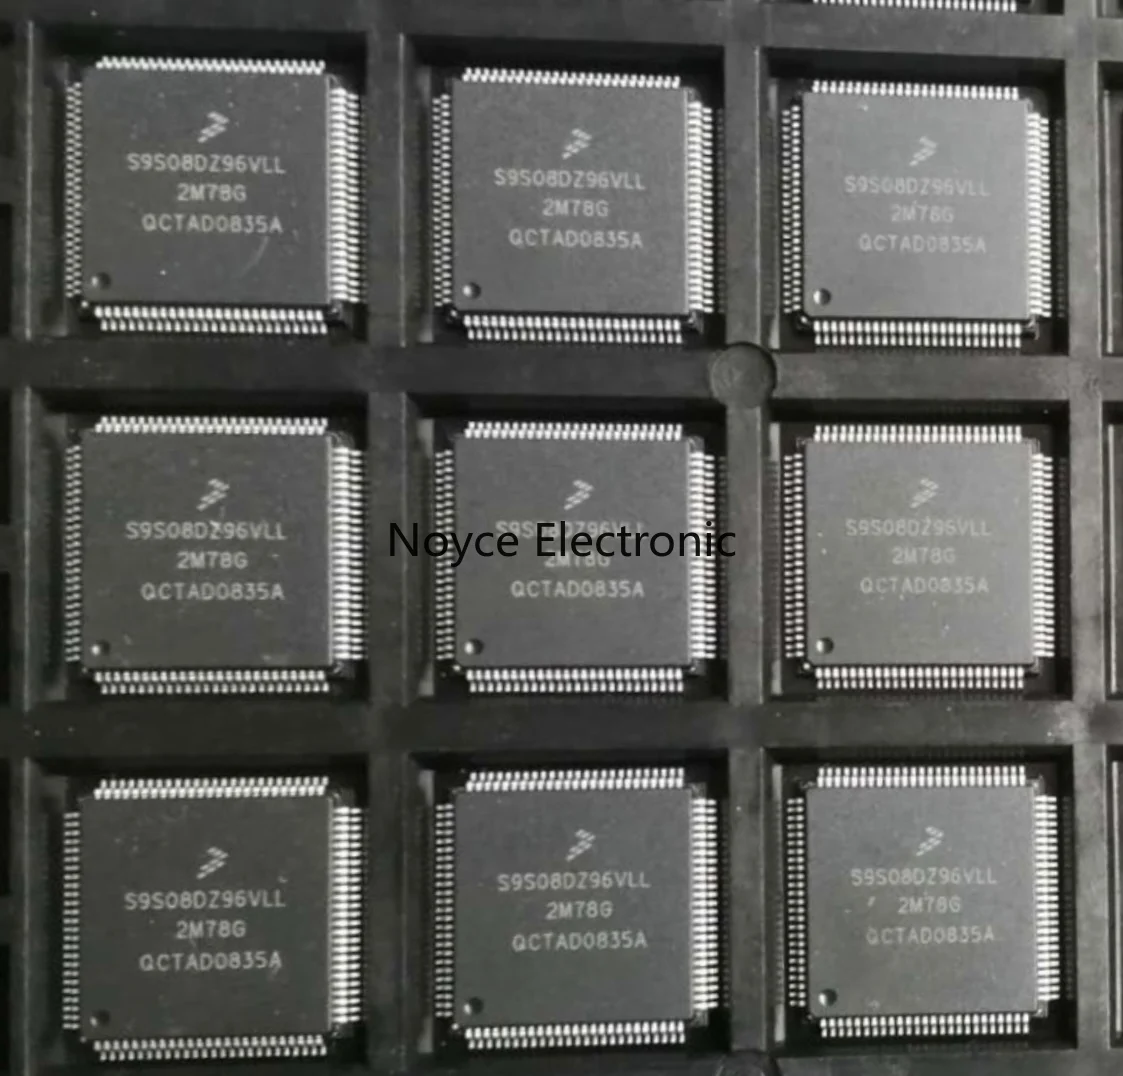 1pcs/S9S08DZ96 new original genuine spot S9S08DZ96VLL TQFP100 microcontroller chip new original xc5204 6pq100c xc5204 6pq100i xc5vlx85t 1ffg1136c xc5vlx85t 1ffg1136i xc3s50 4vqg100c xc3s50 4vqg100i tqfp100